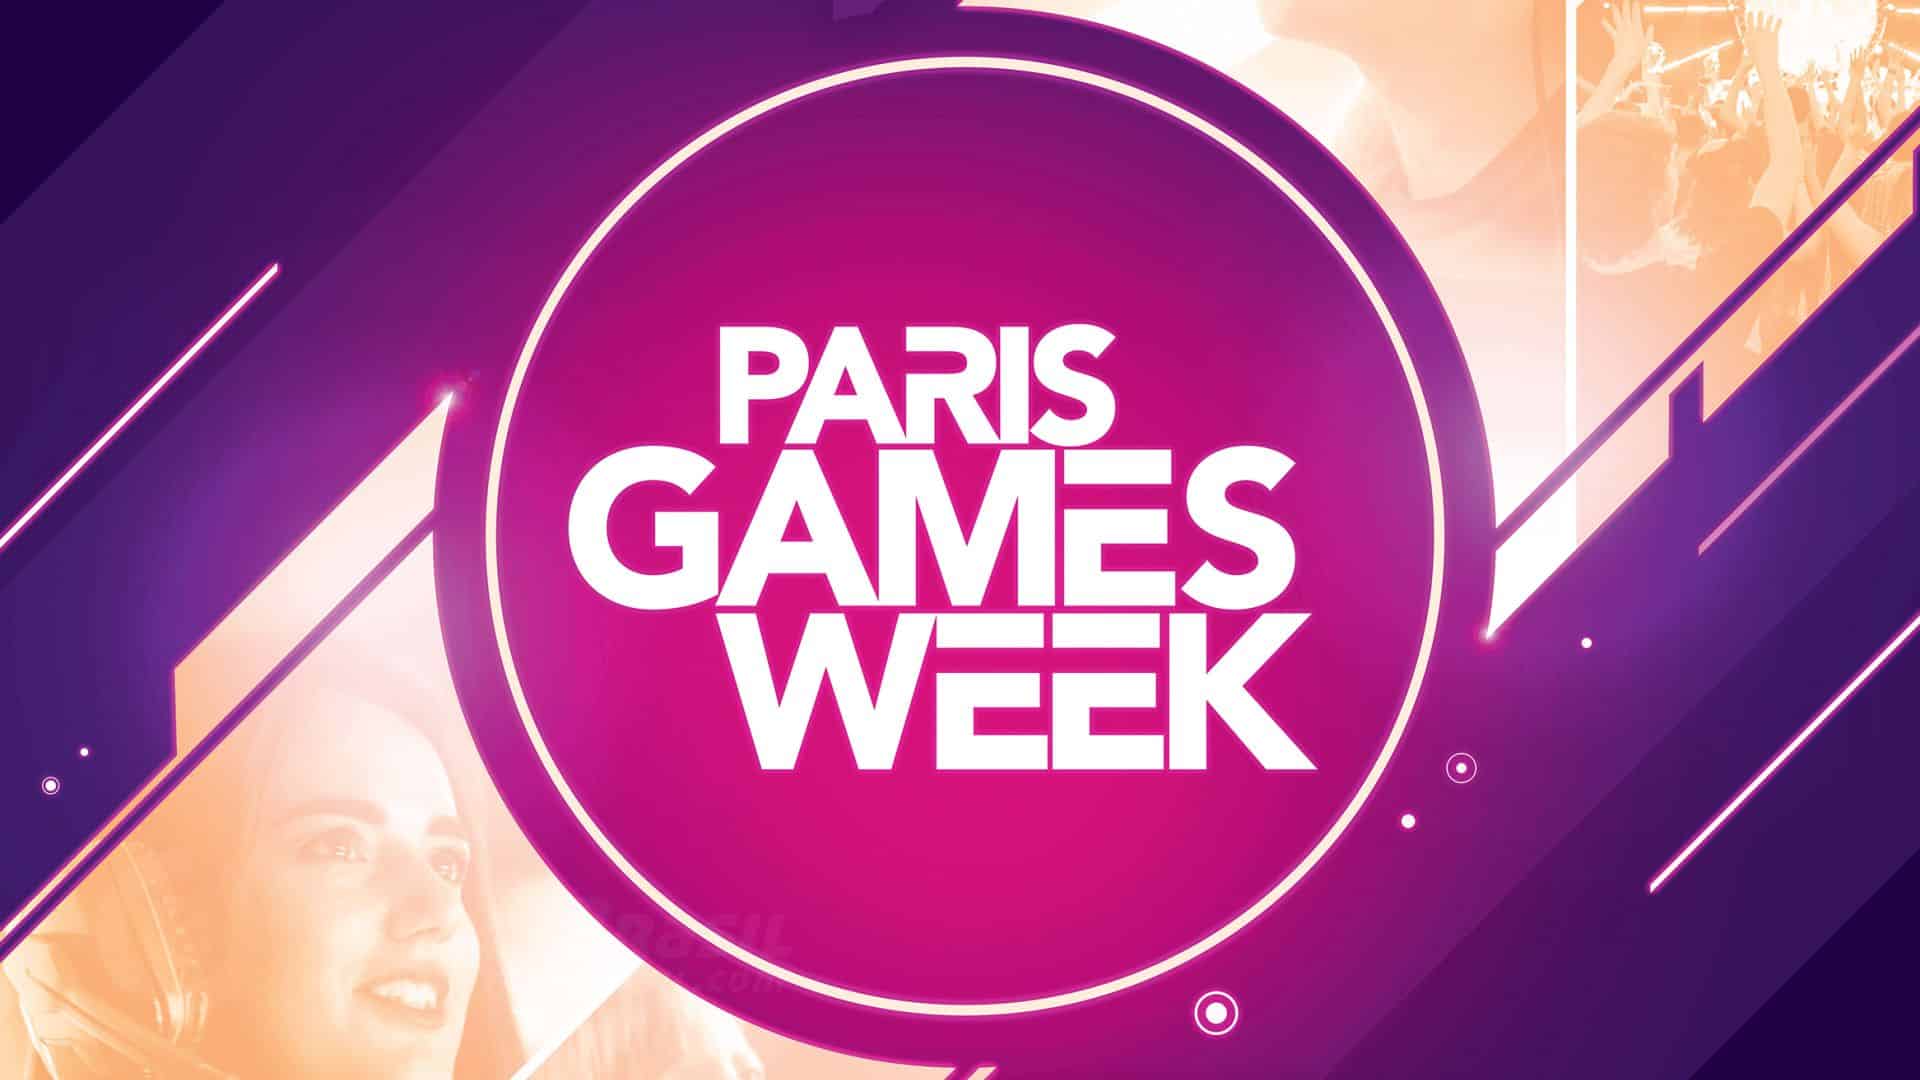 Paris games week 2020 também está cancelada | d240362f paris games week scrn07052020 | paris games week notícias